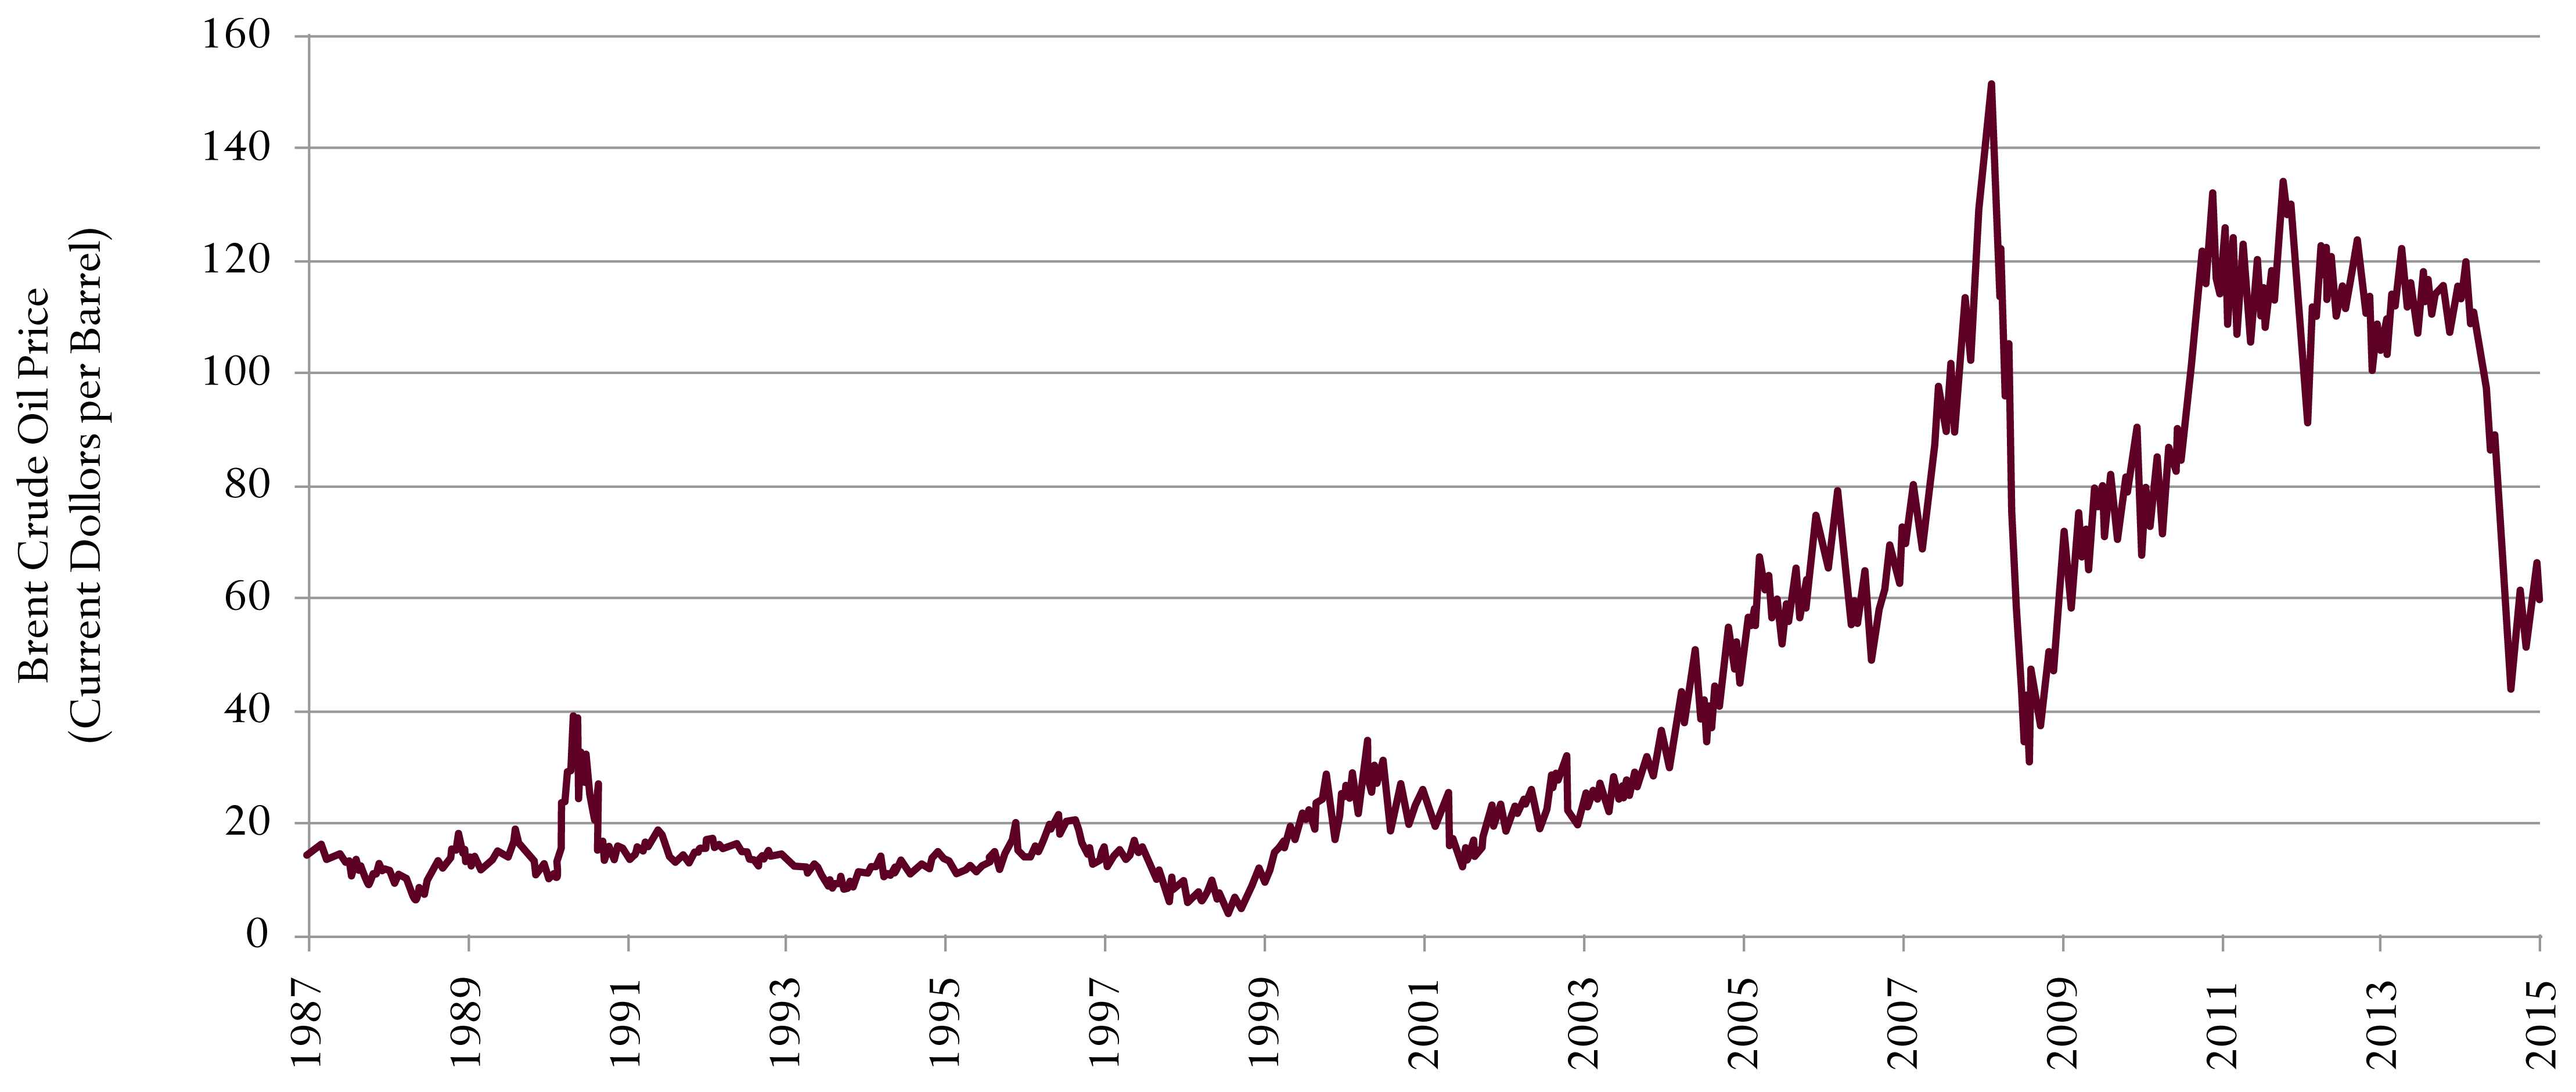 Crude Oil Prices1 